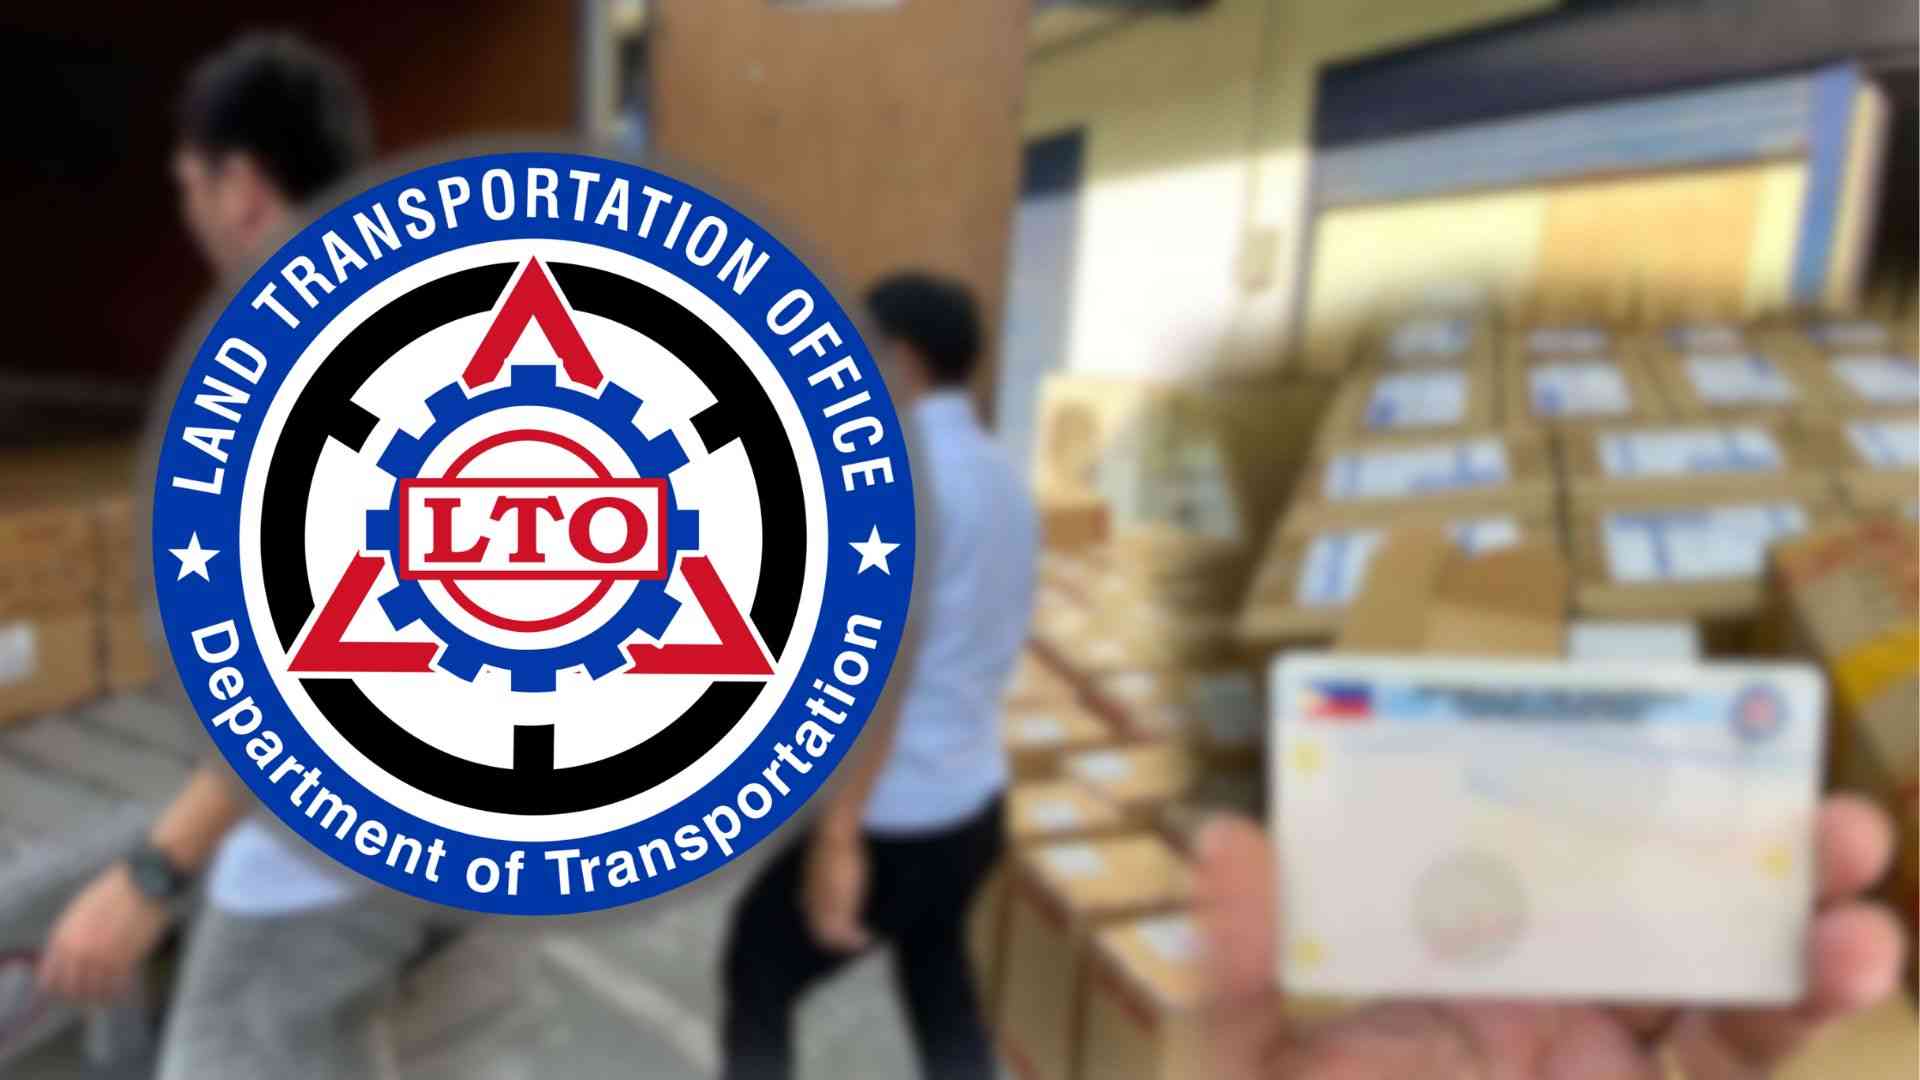 CA lifts temporary restraining order on LTO plastic cards